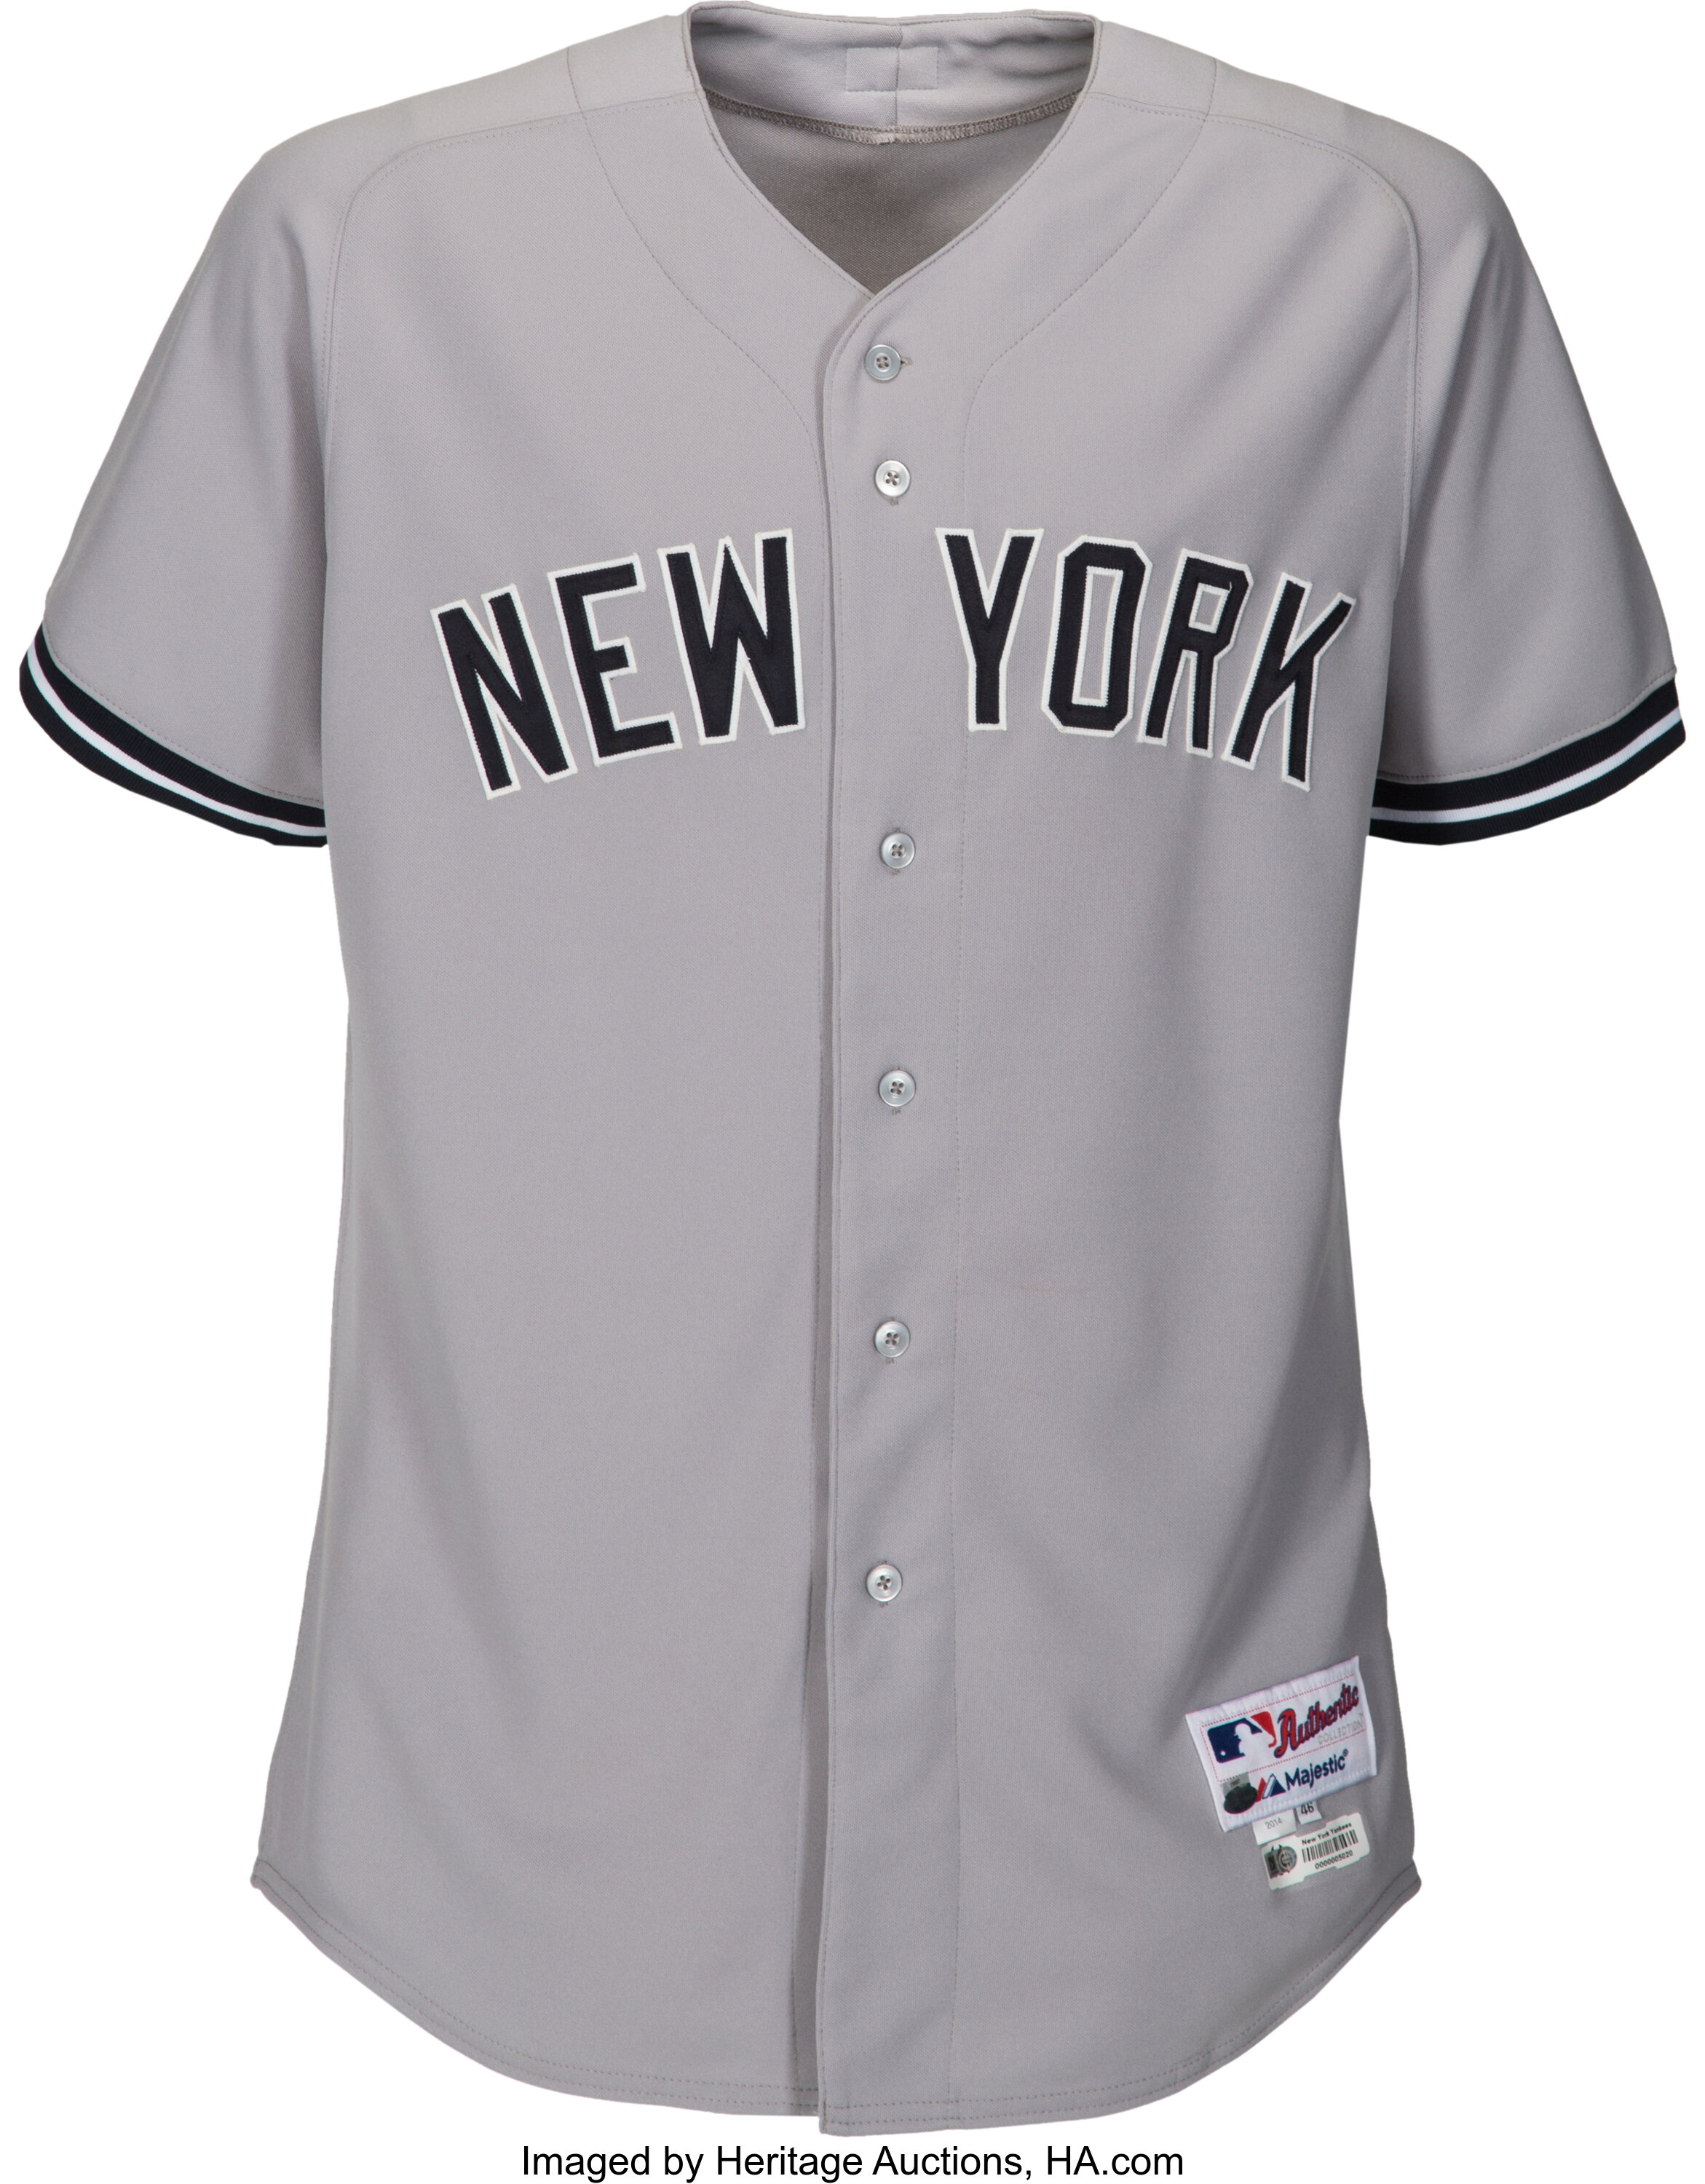 2014 Derek Jeter Game Worn & Signed New York Yankees Uniform from, Lot  #80019